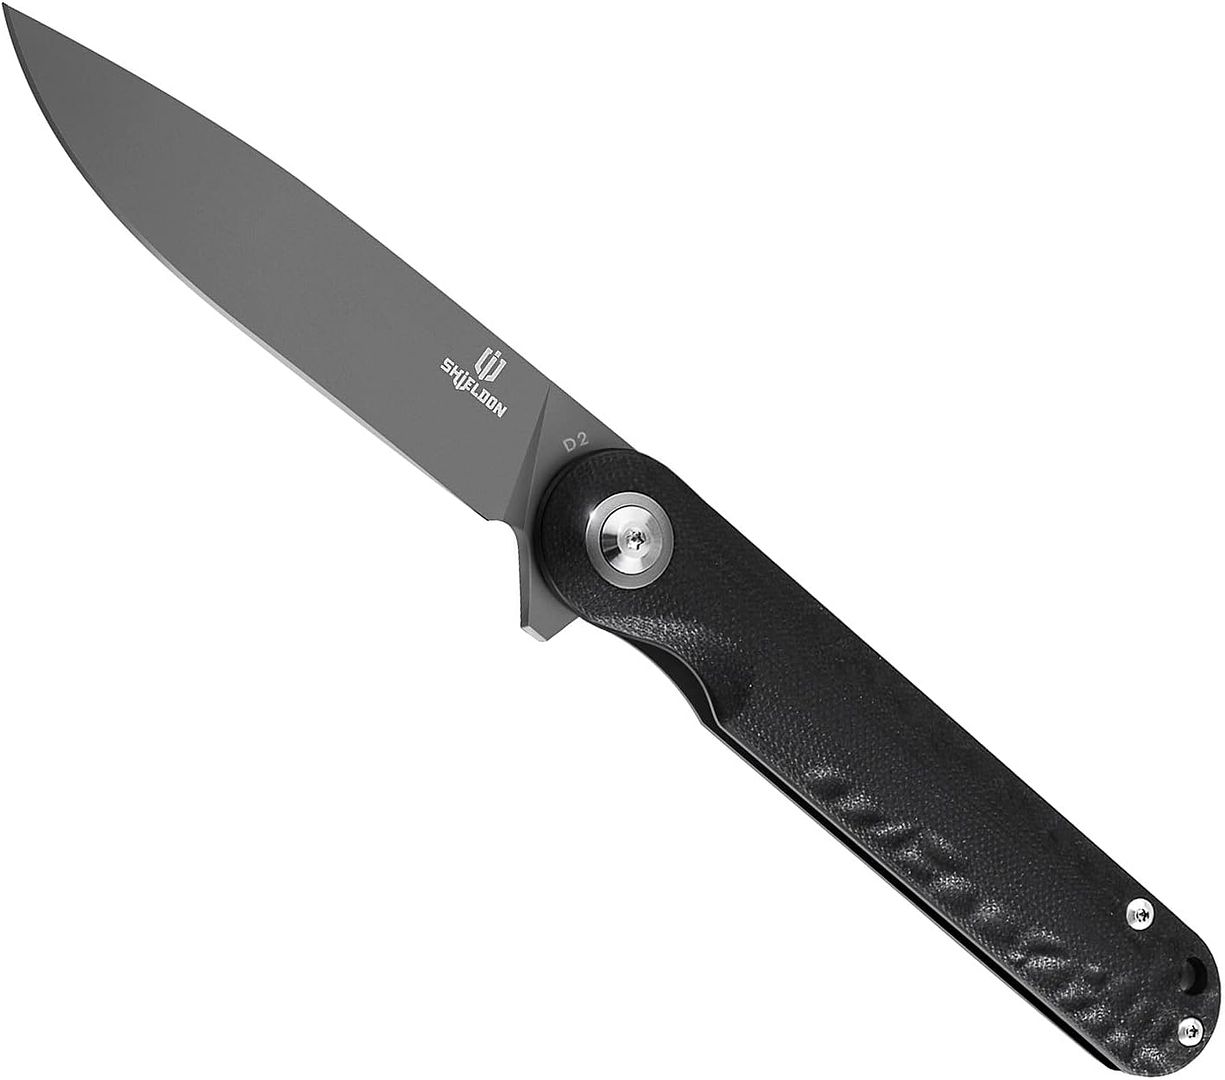 Dinoclier Empoleon Folding EDC Knife, 3.54" Gray D2 Blade G10 Handle Ball Bearings Pivot, Liner Lock Flipper Pocket Knife